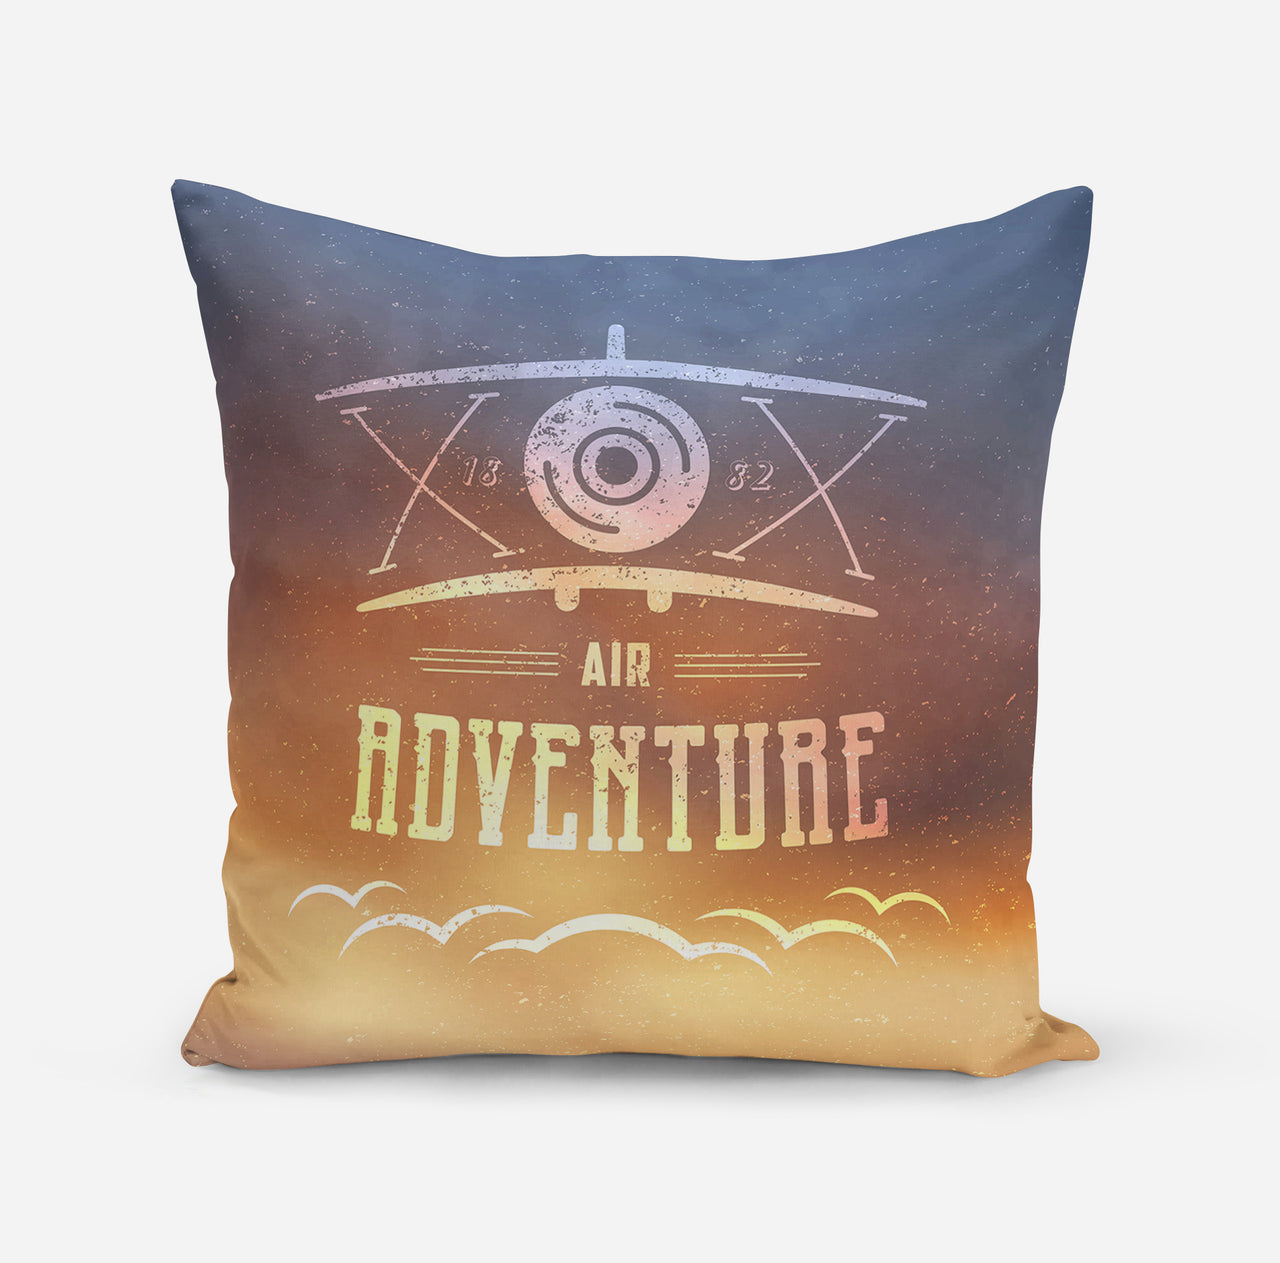 Air Adventure Designed Pillows